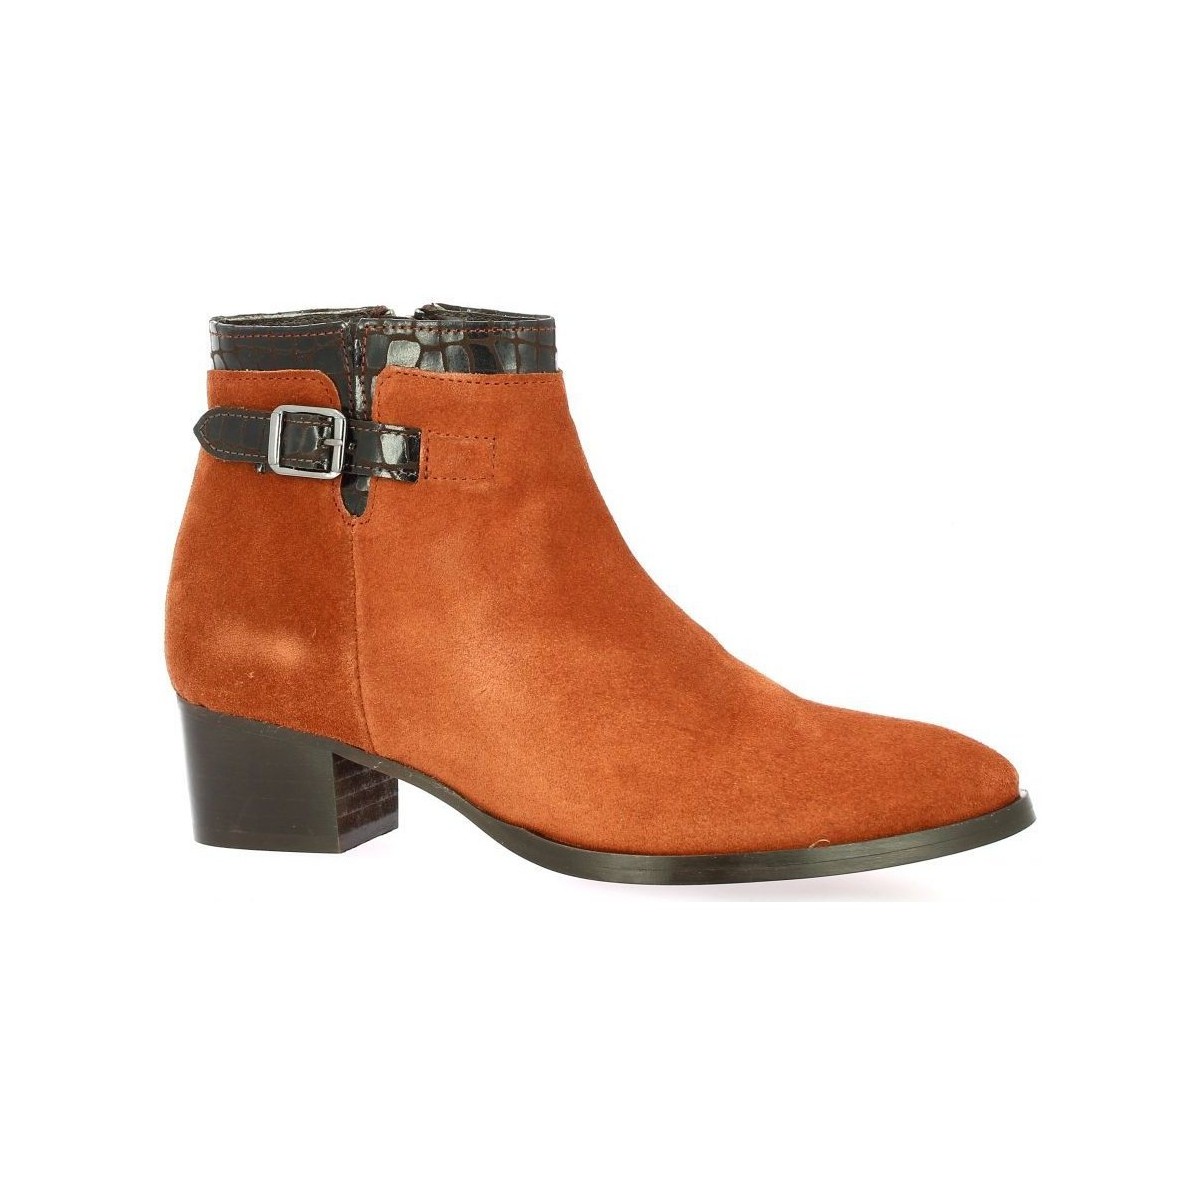 Chaussures Femme Boots Sandals So Send Boots Sandals cuir velours  rouille Orange